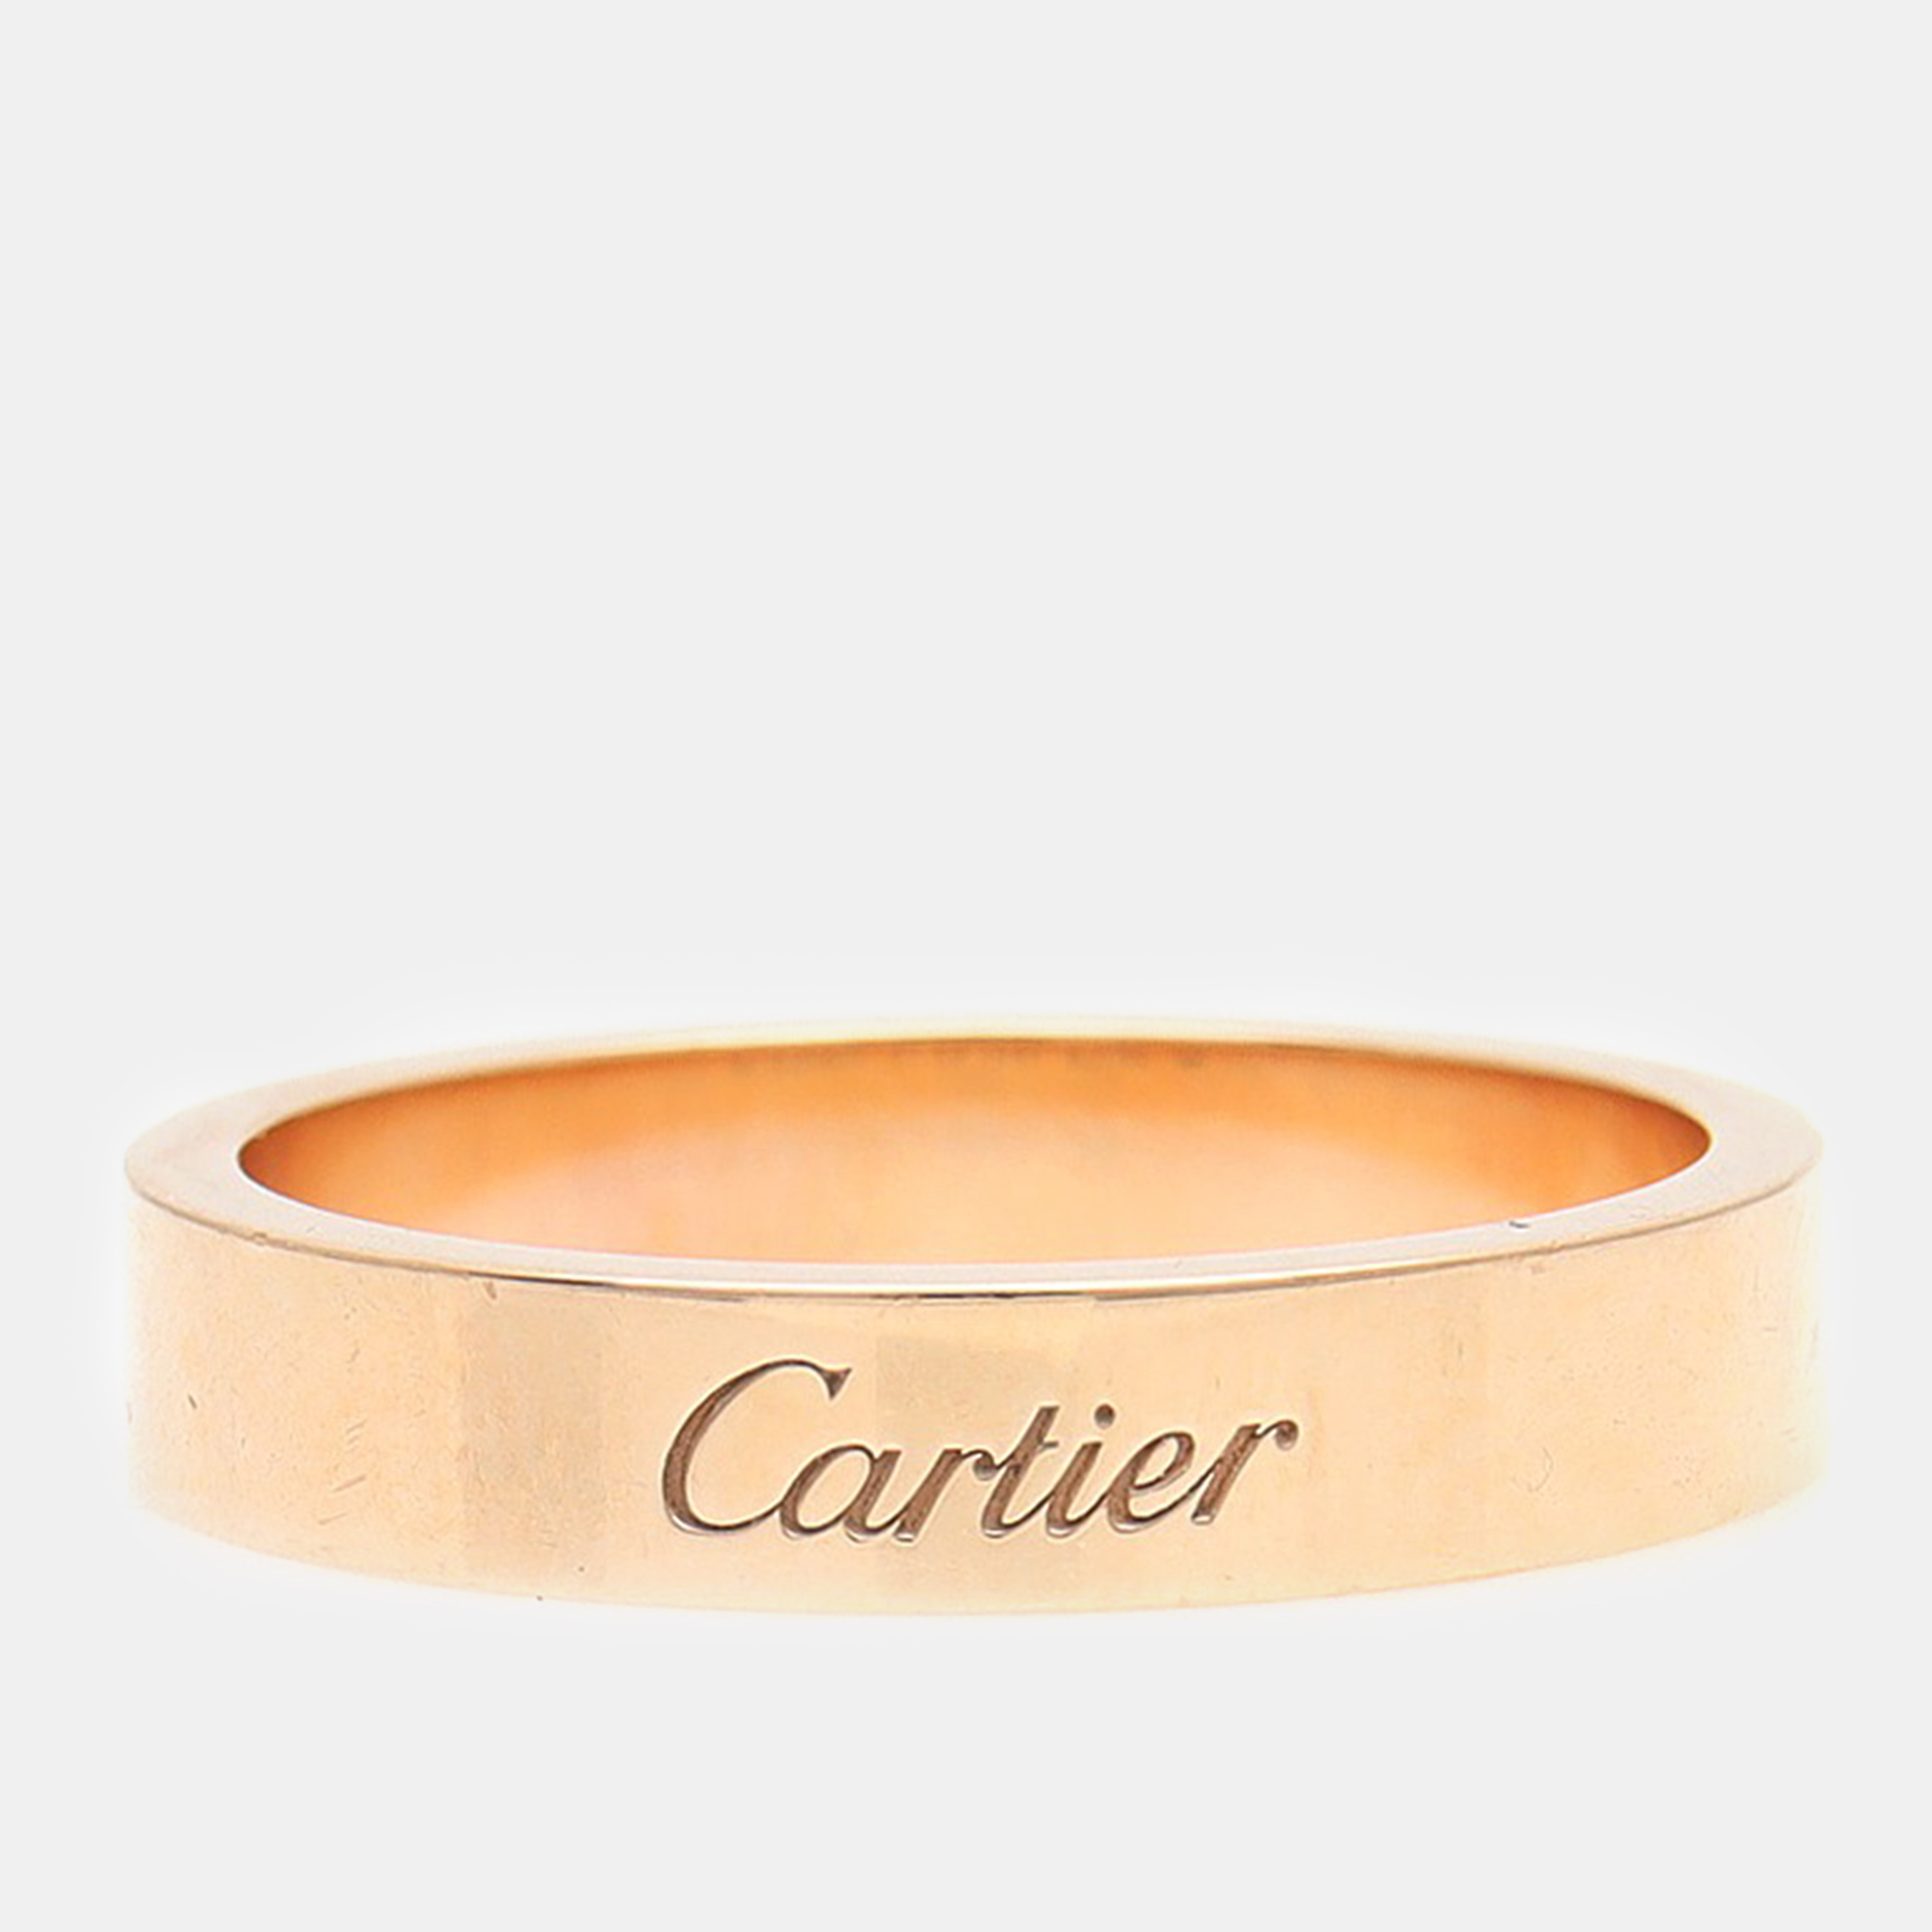 Cartier 18k pink gold logo ring size 57